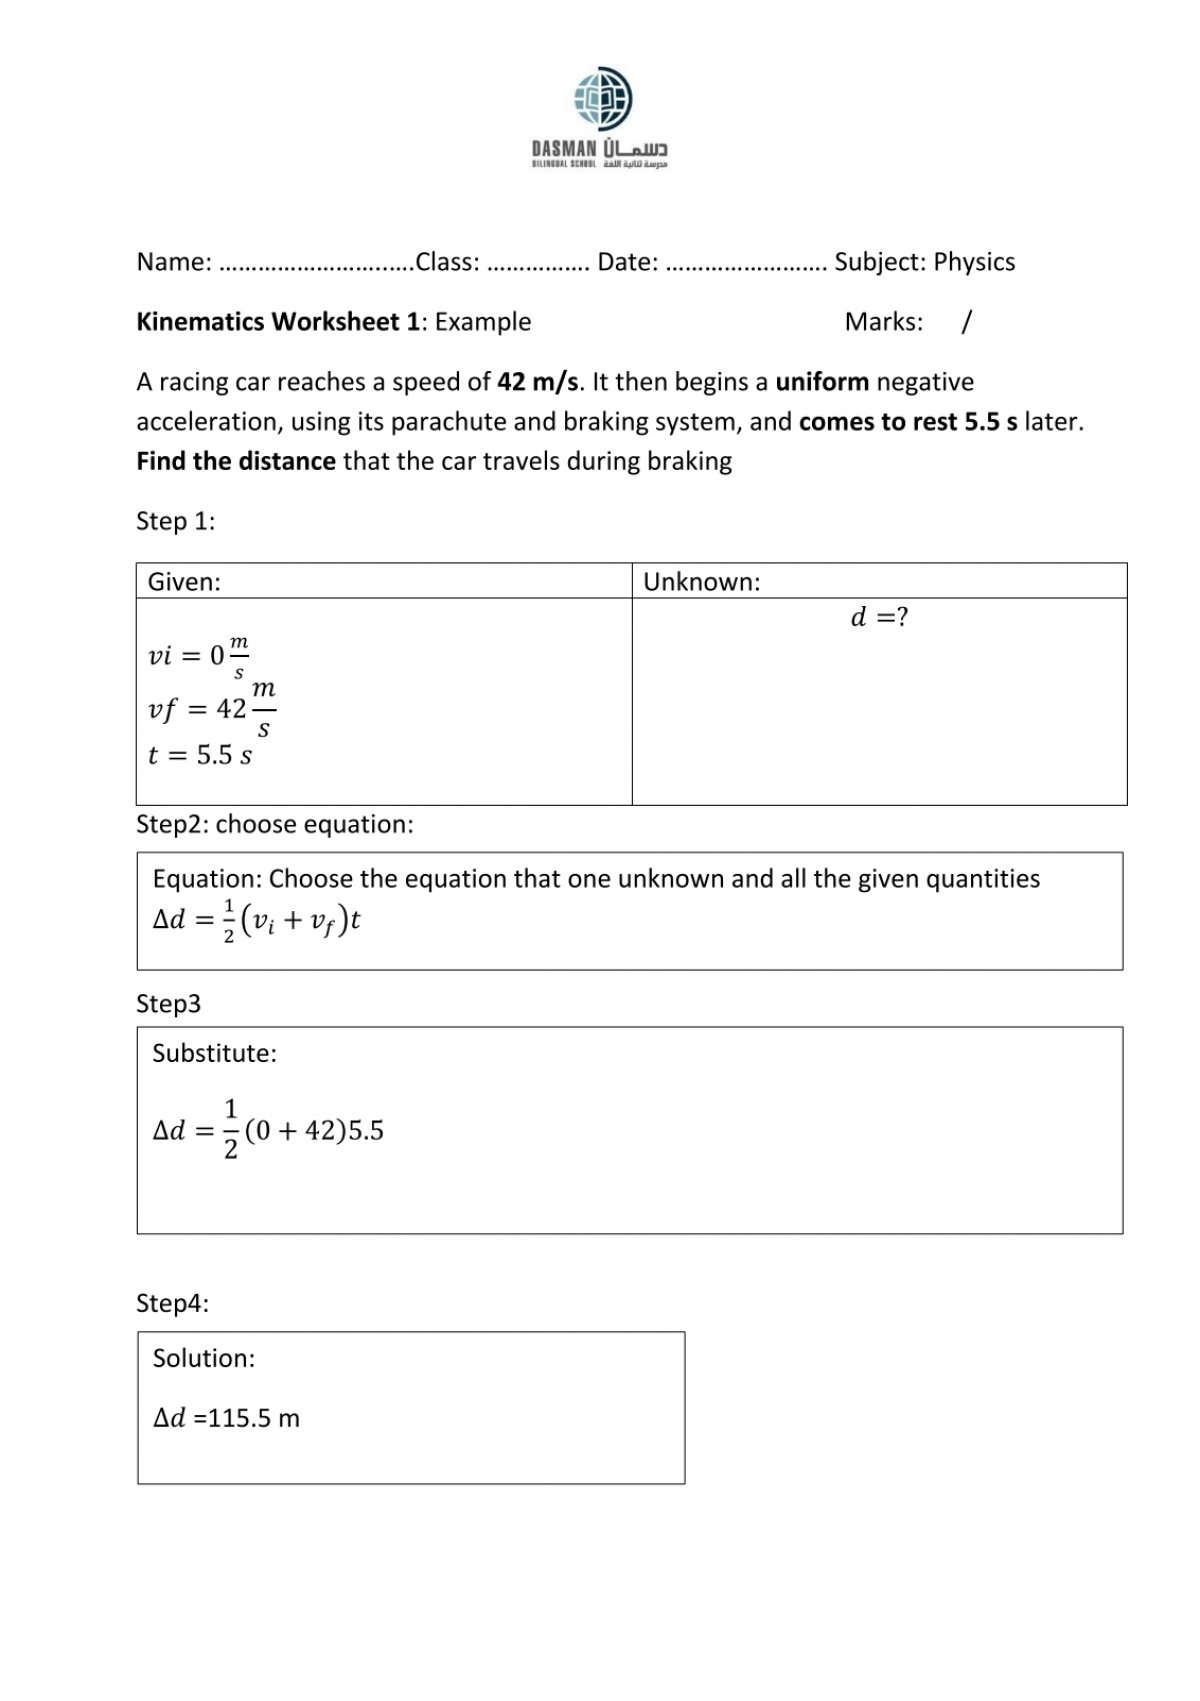 Kinematics Worksheet 1 and 2 Answer key